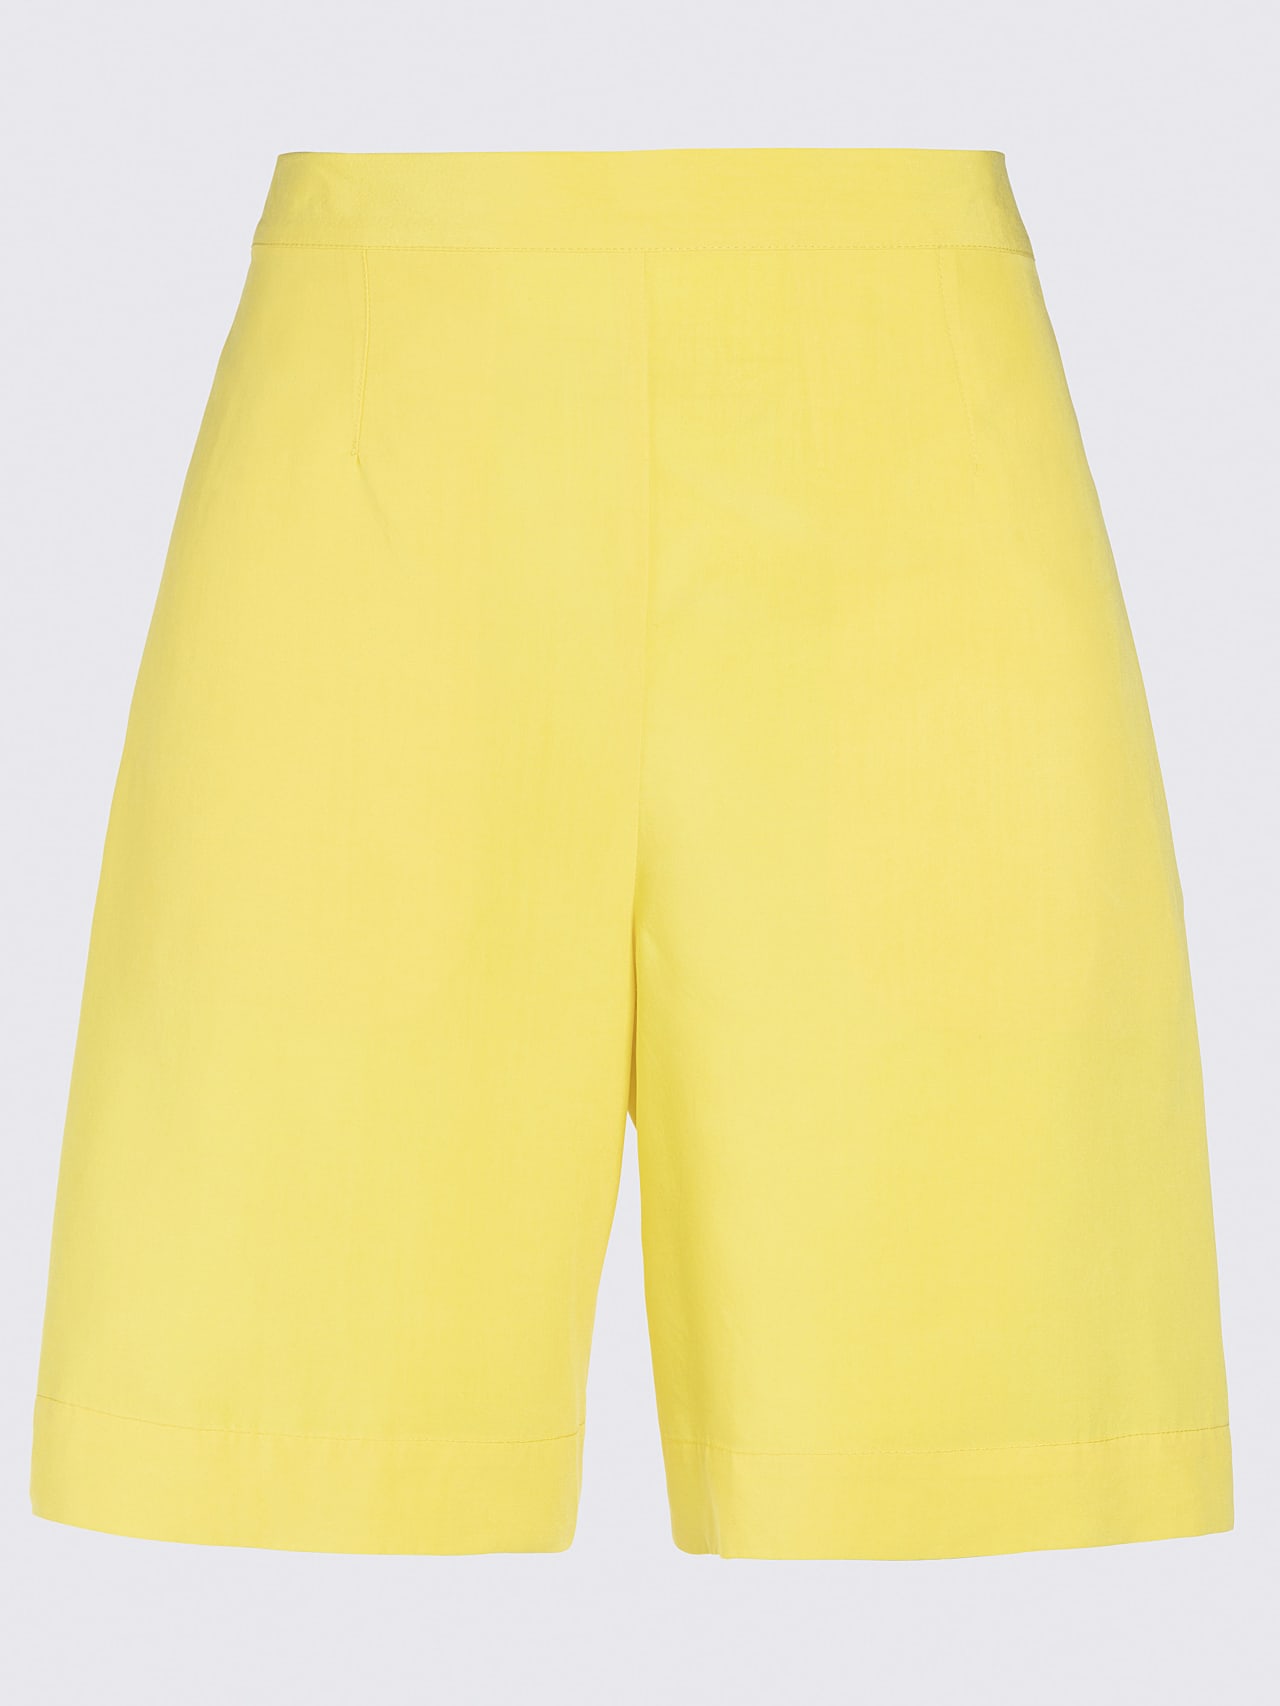 AlphaTauri | PALAS V1.Y6.01 | Flared Filagen® Shorts in yellow for Women